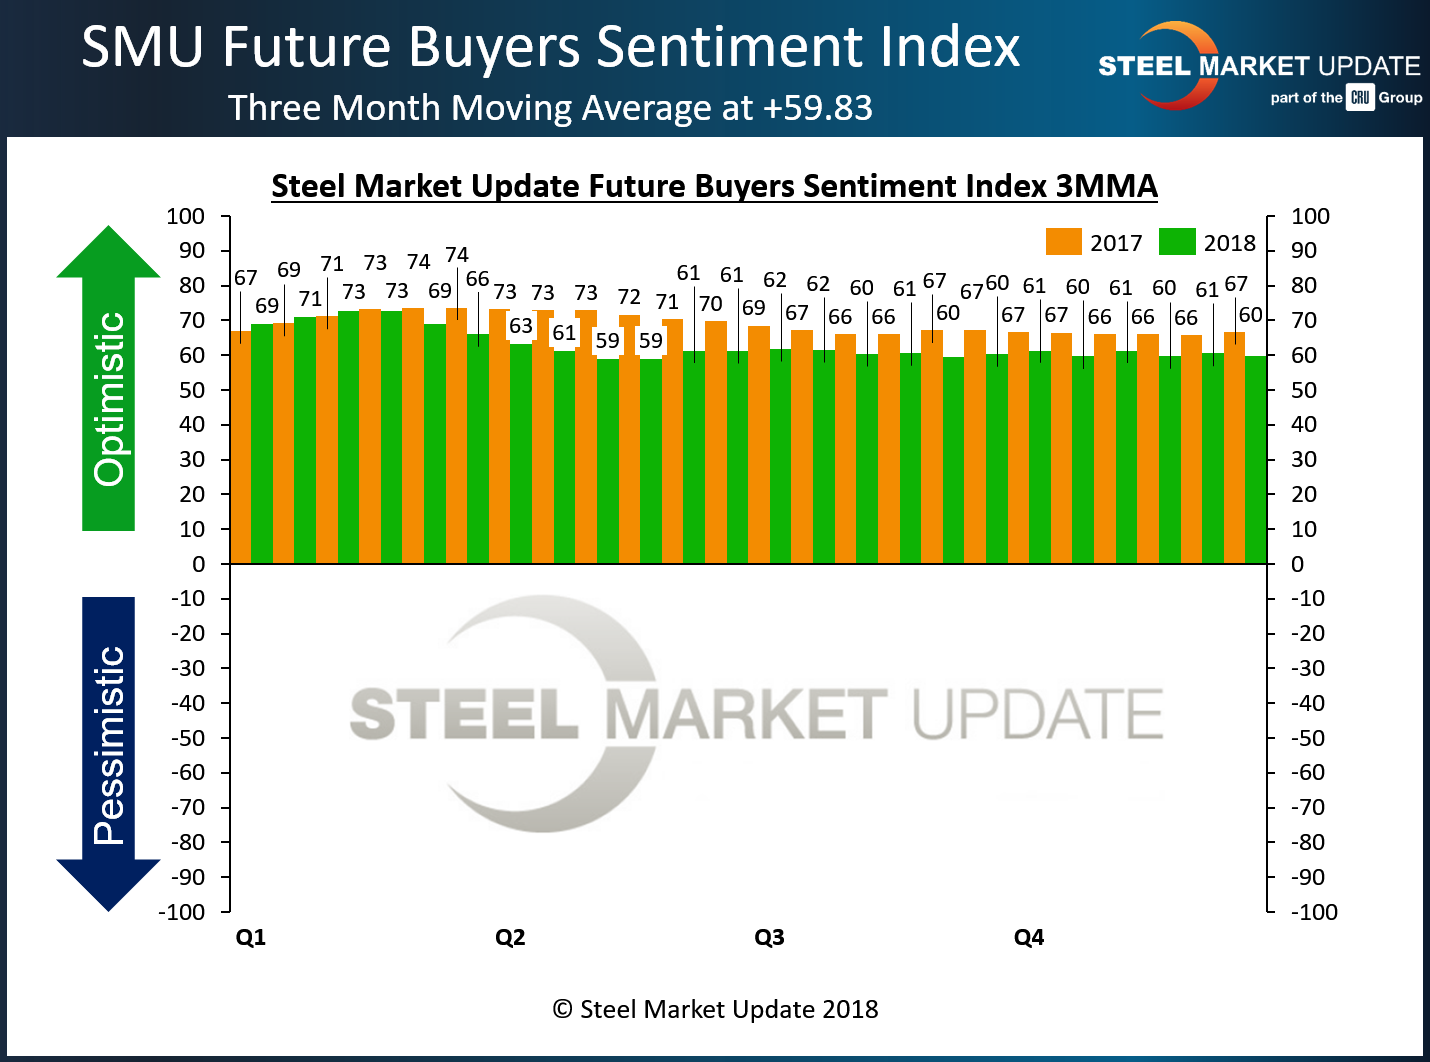 SMU Future Steel Buyers Sentiment Index